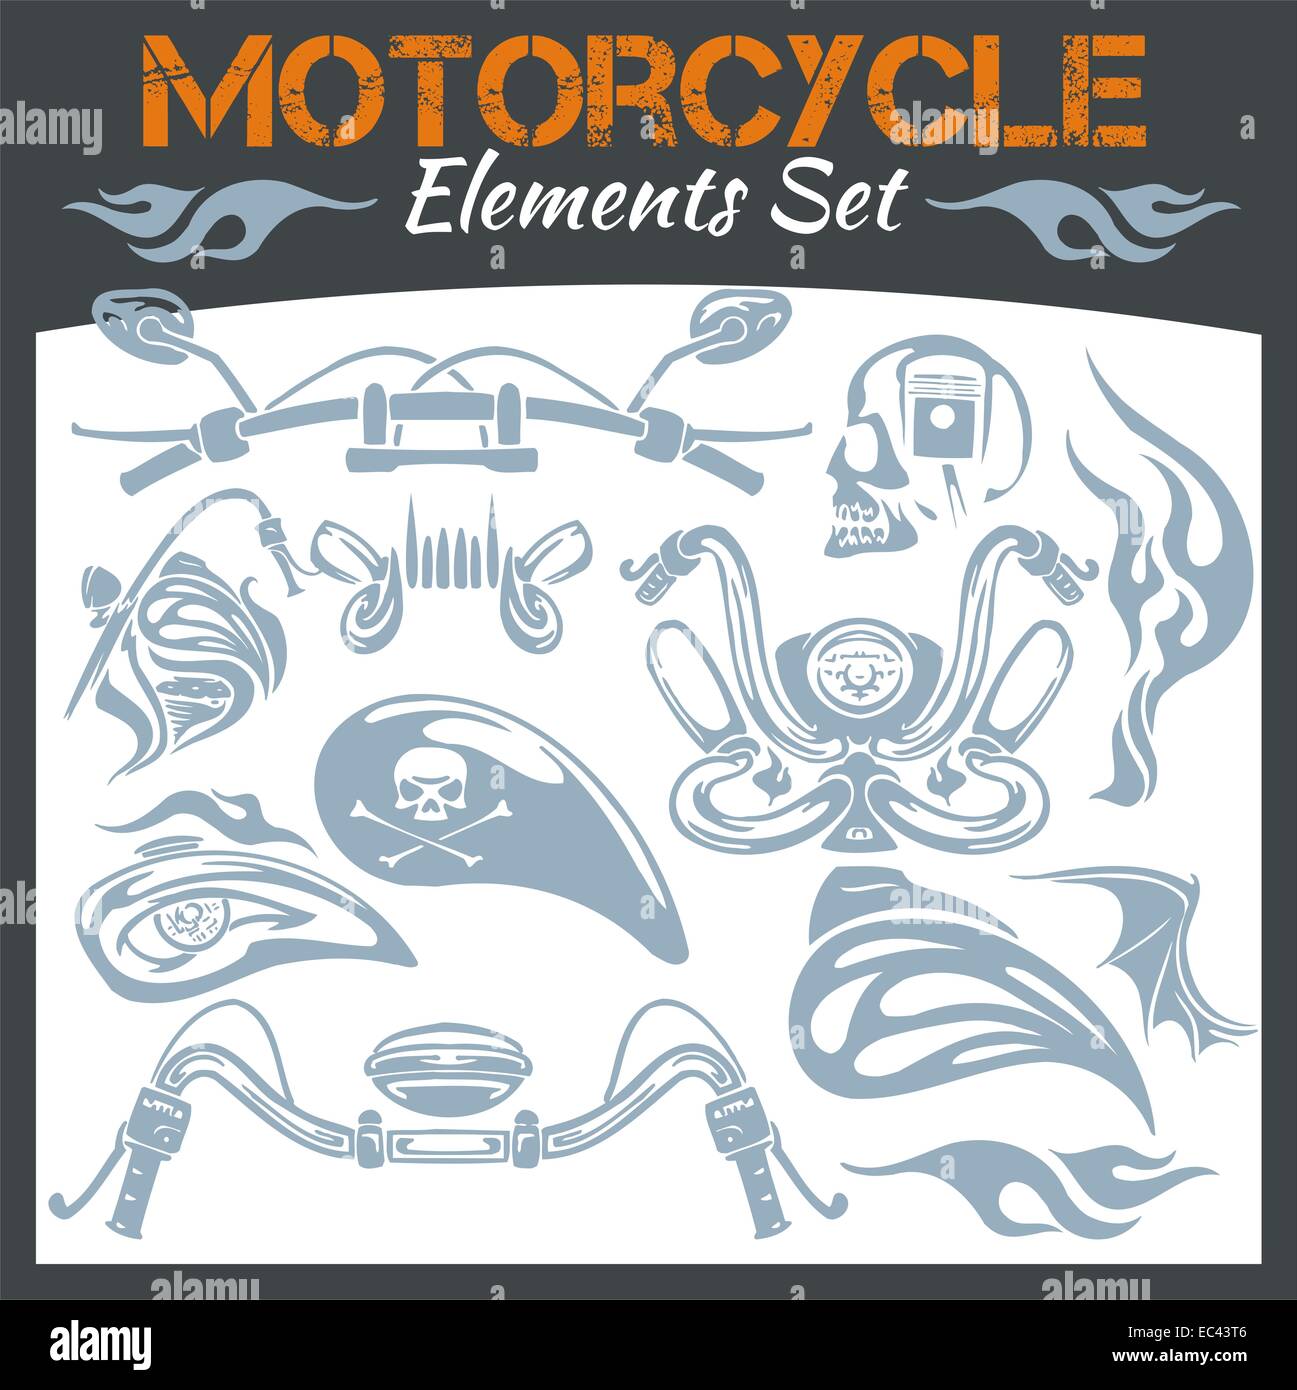 Motorcycle elements  set. Stock Photo